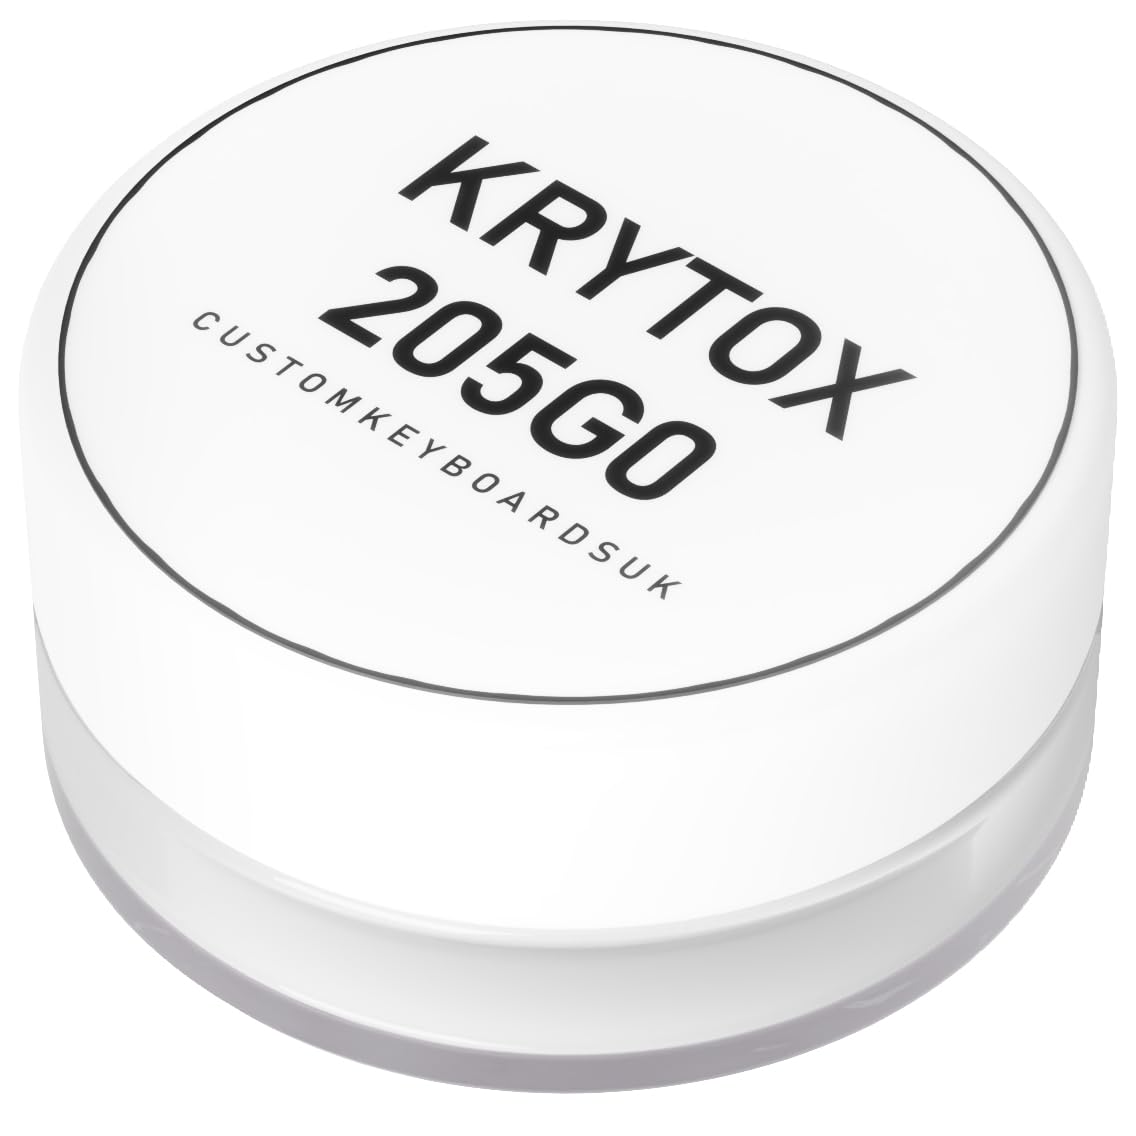 Krytox GPL 205g0 Lubricant Lubricant Krytox   